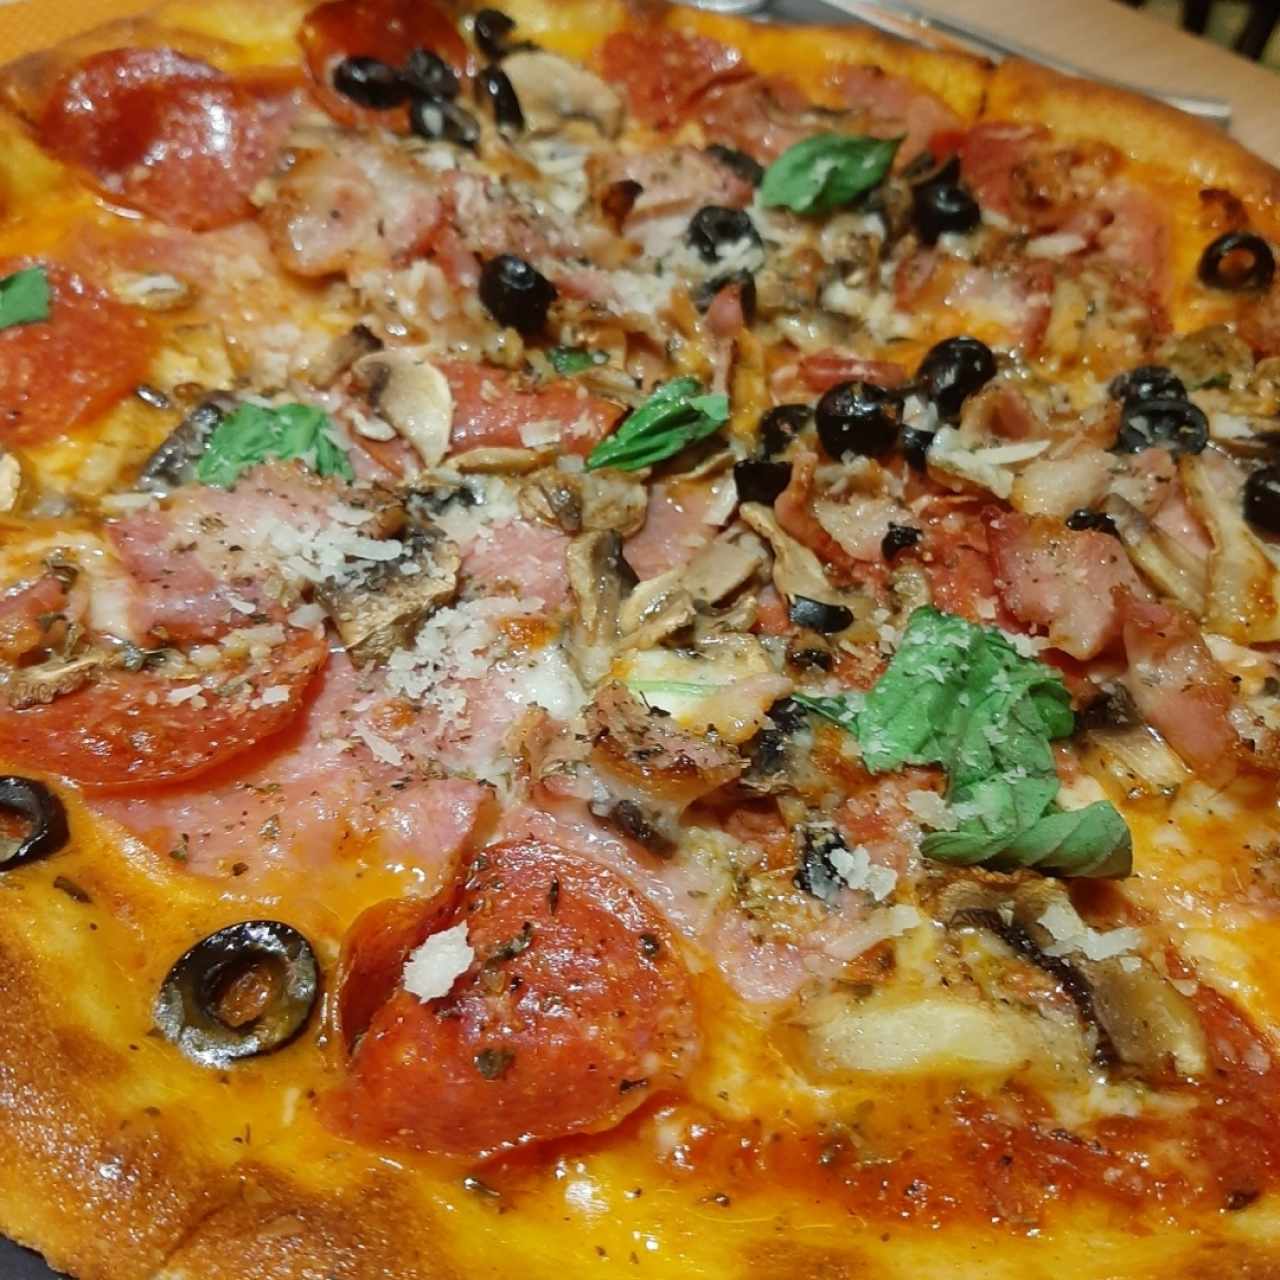 Pizzas Especiales 12" 18" - Don Tomasino 14$ - 26.50$